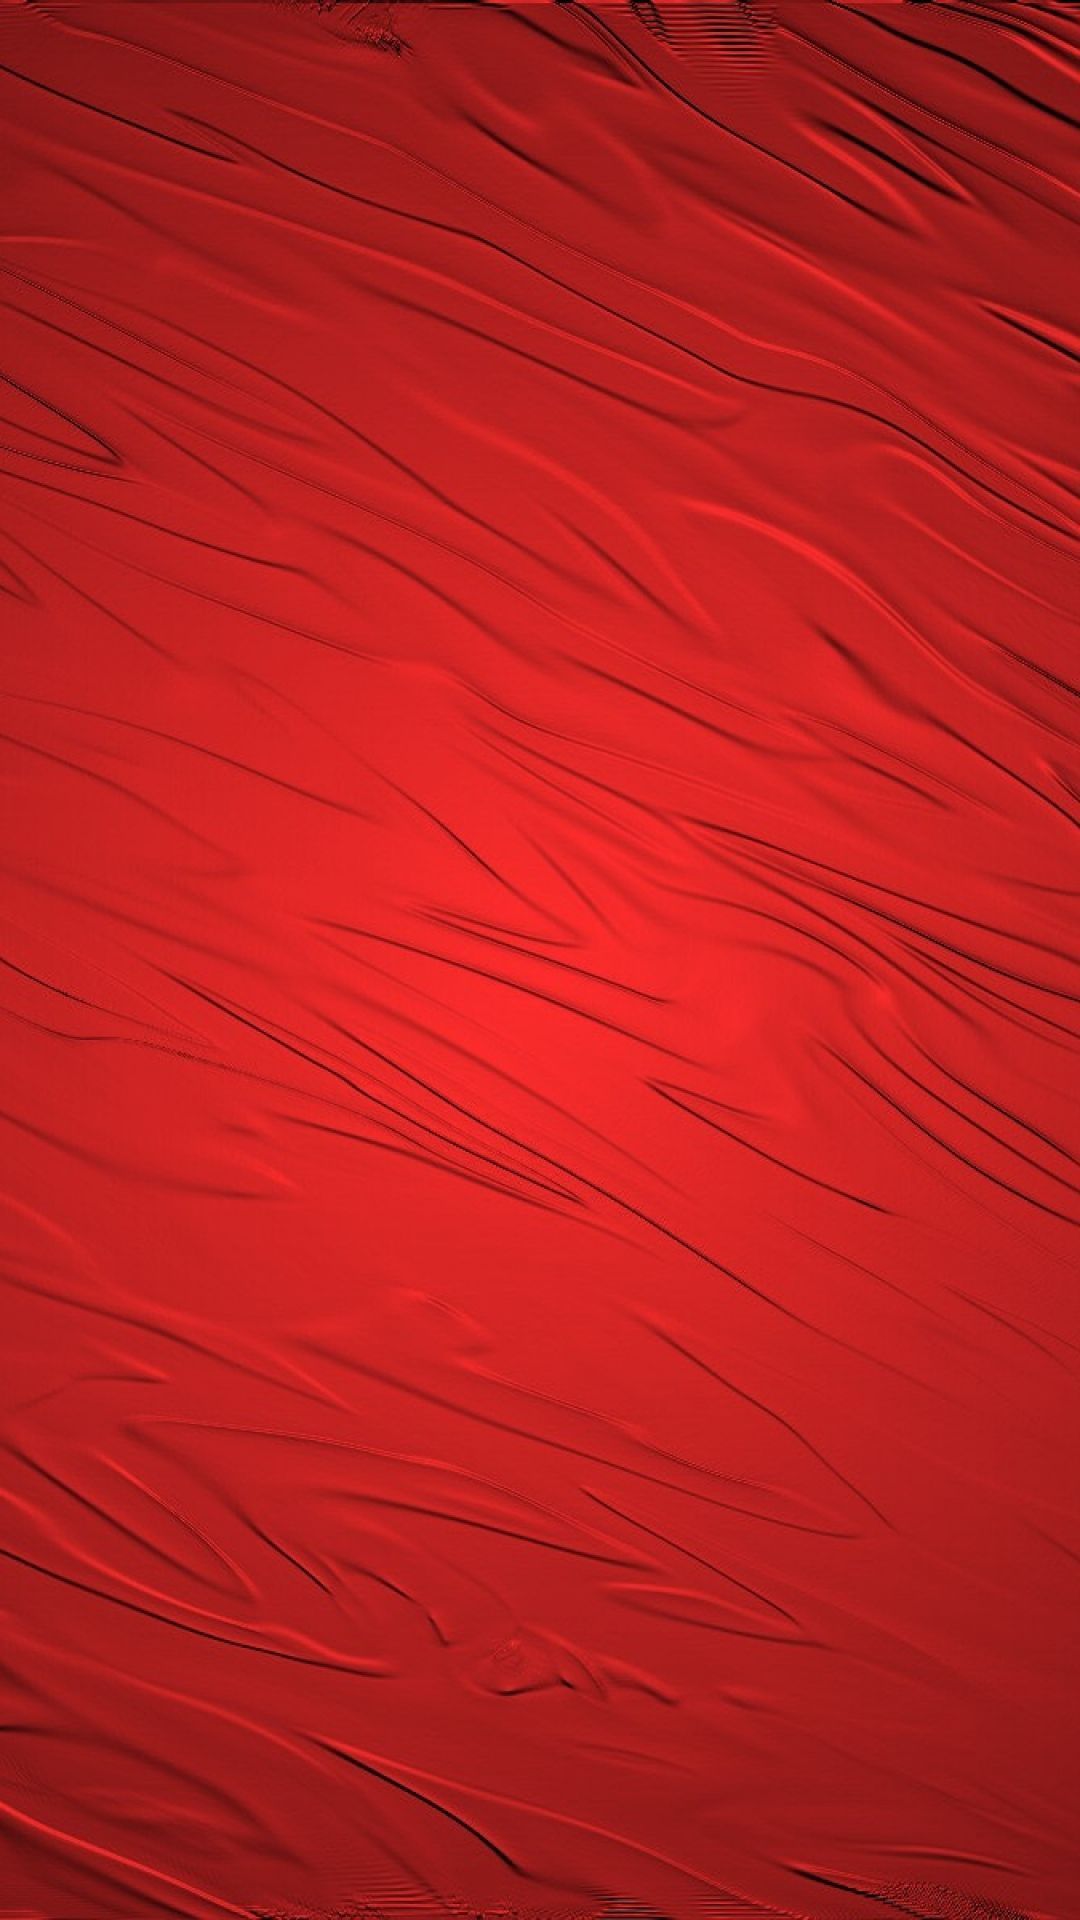 Crimson Red Wallpaper